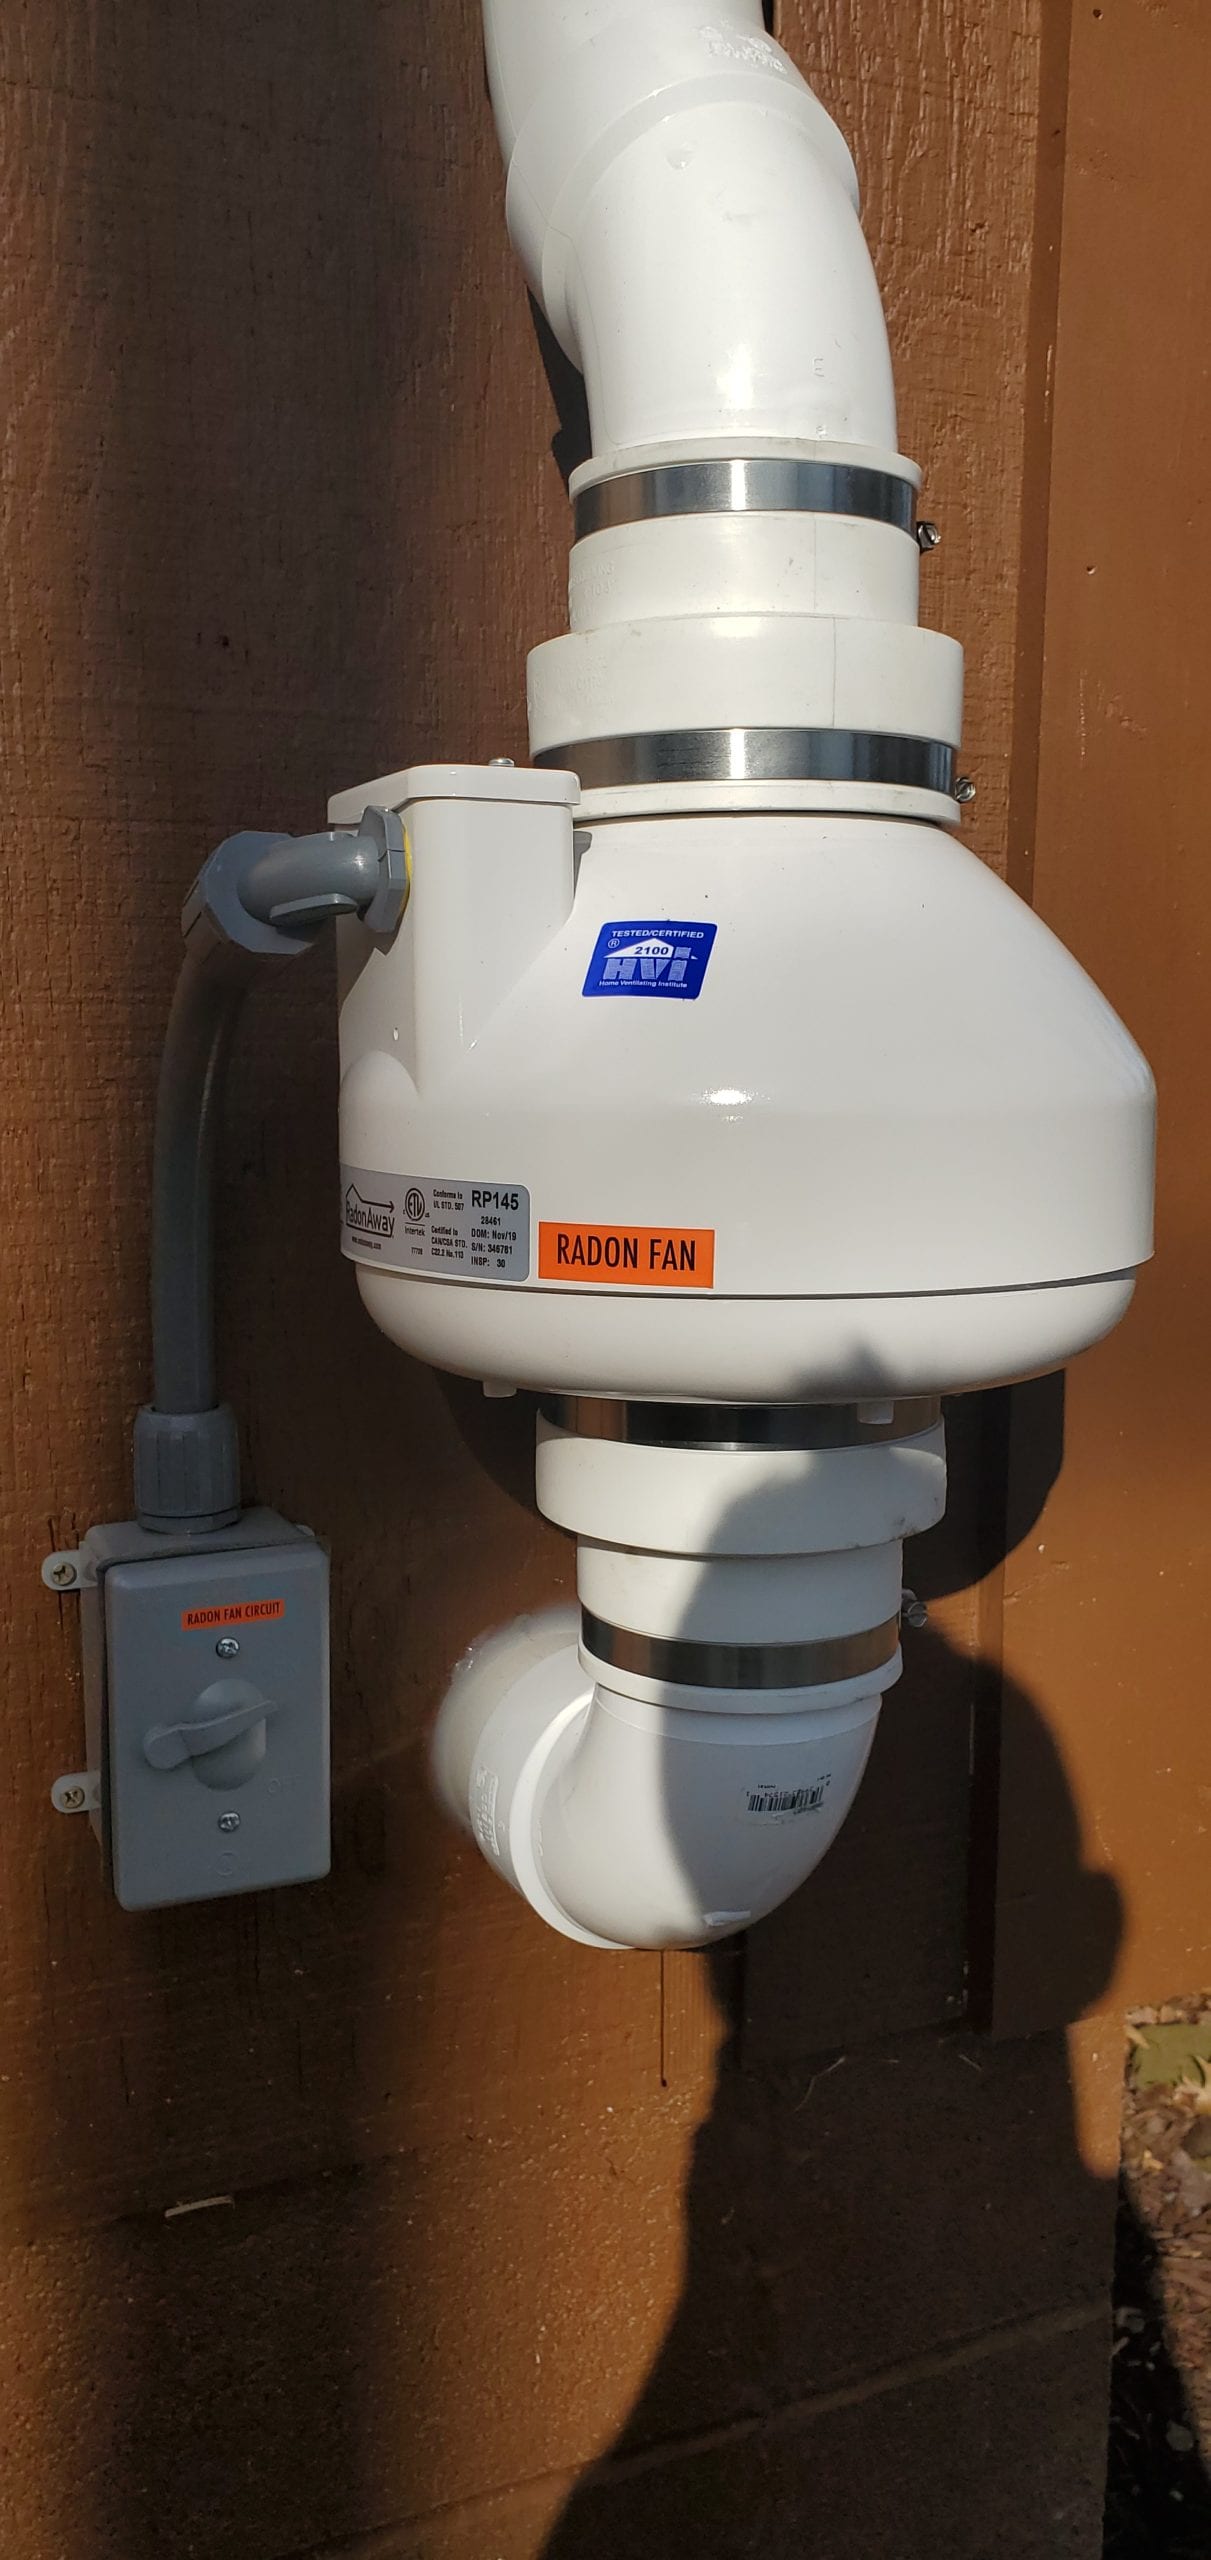 Exterior Radon Mitigation system fan and electrical shutoff